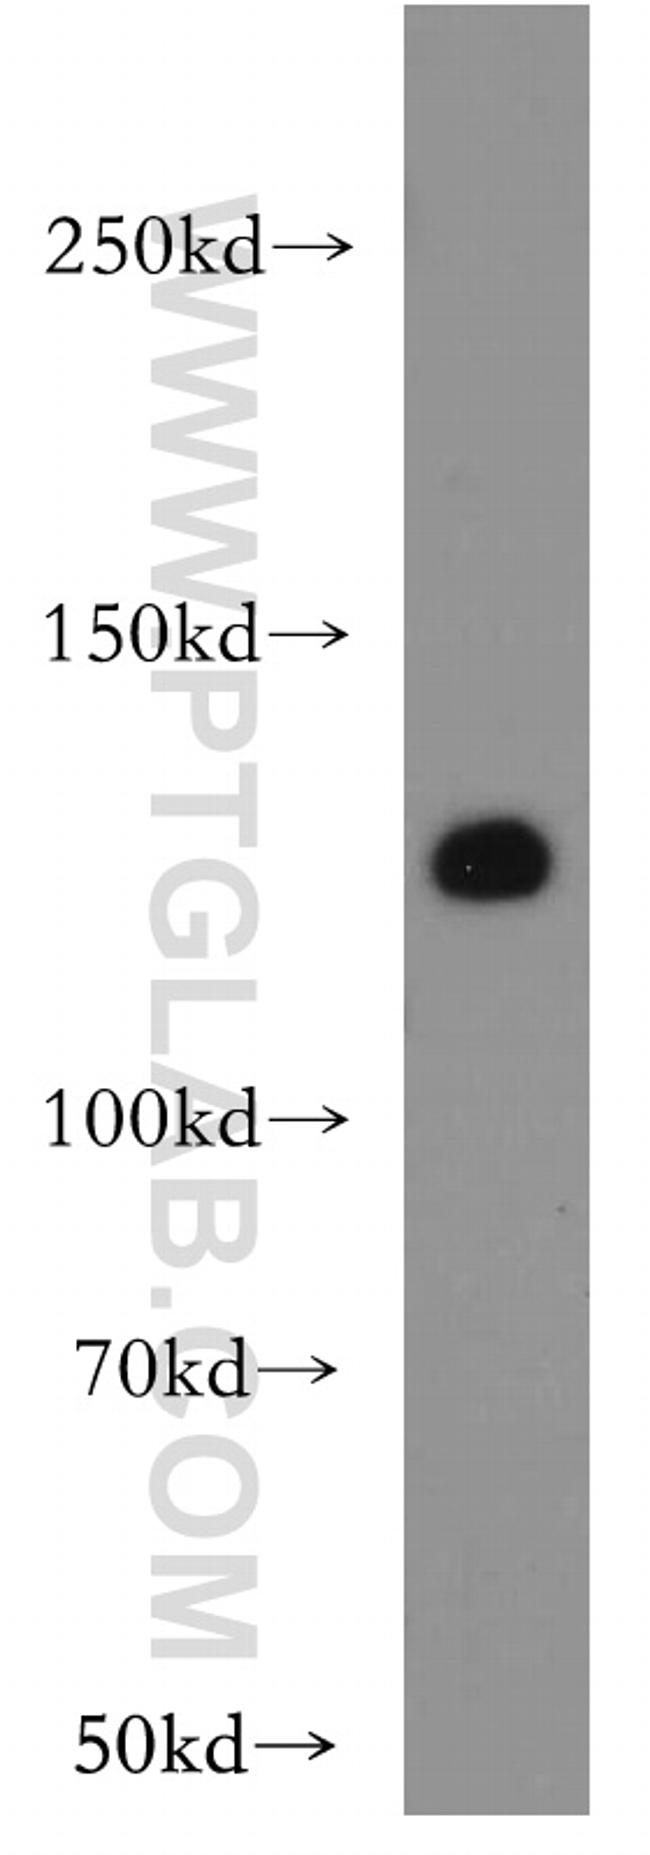 VEGFR3 Antibody in Western Blot (WB)